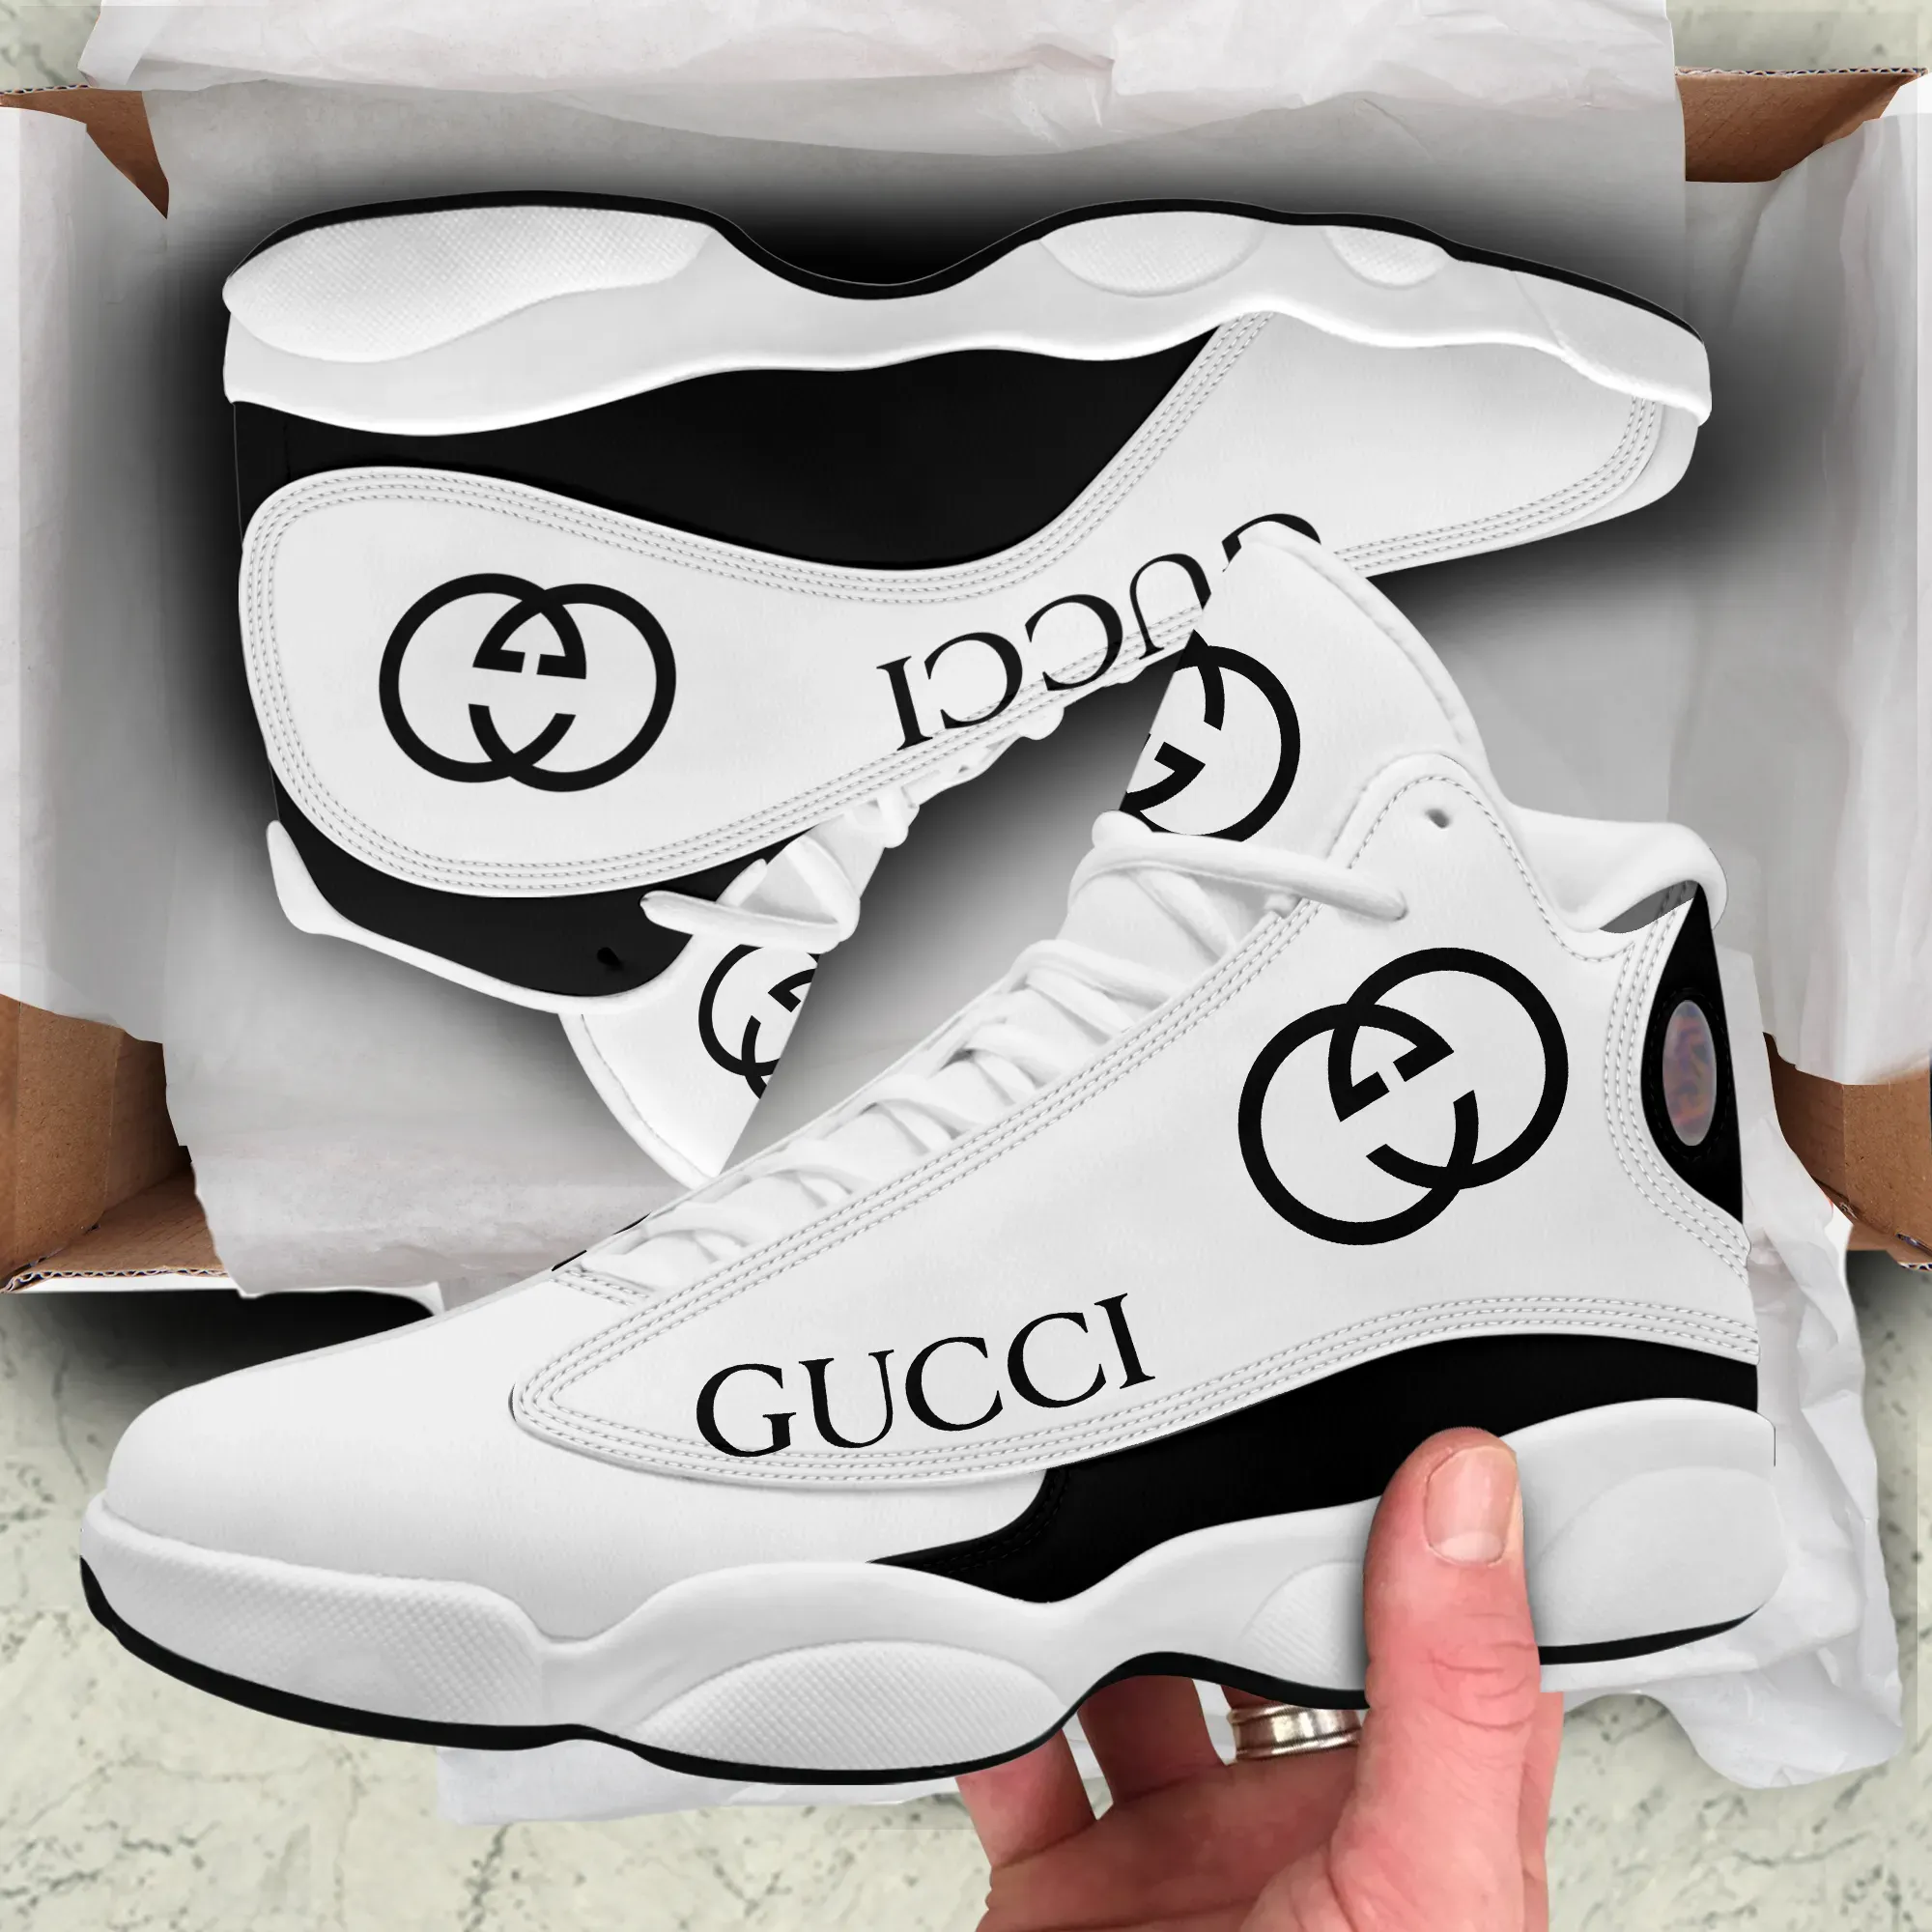 Gucci White Air Jordan 13 Luxury Fashion Sneakers Shoes Trending